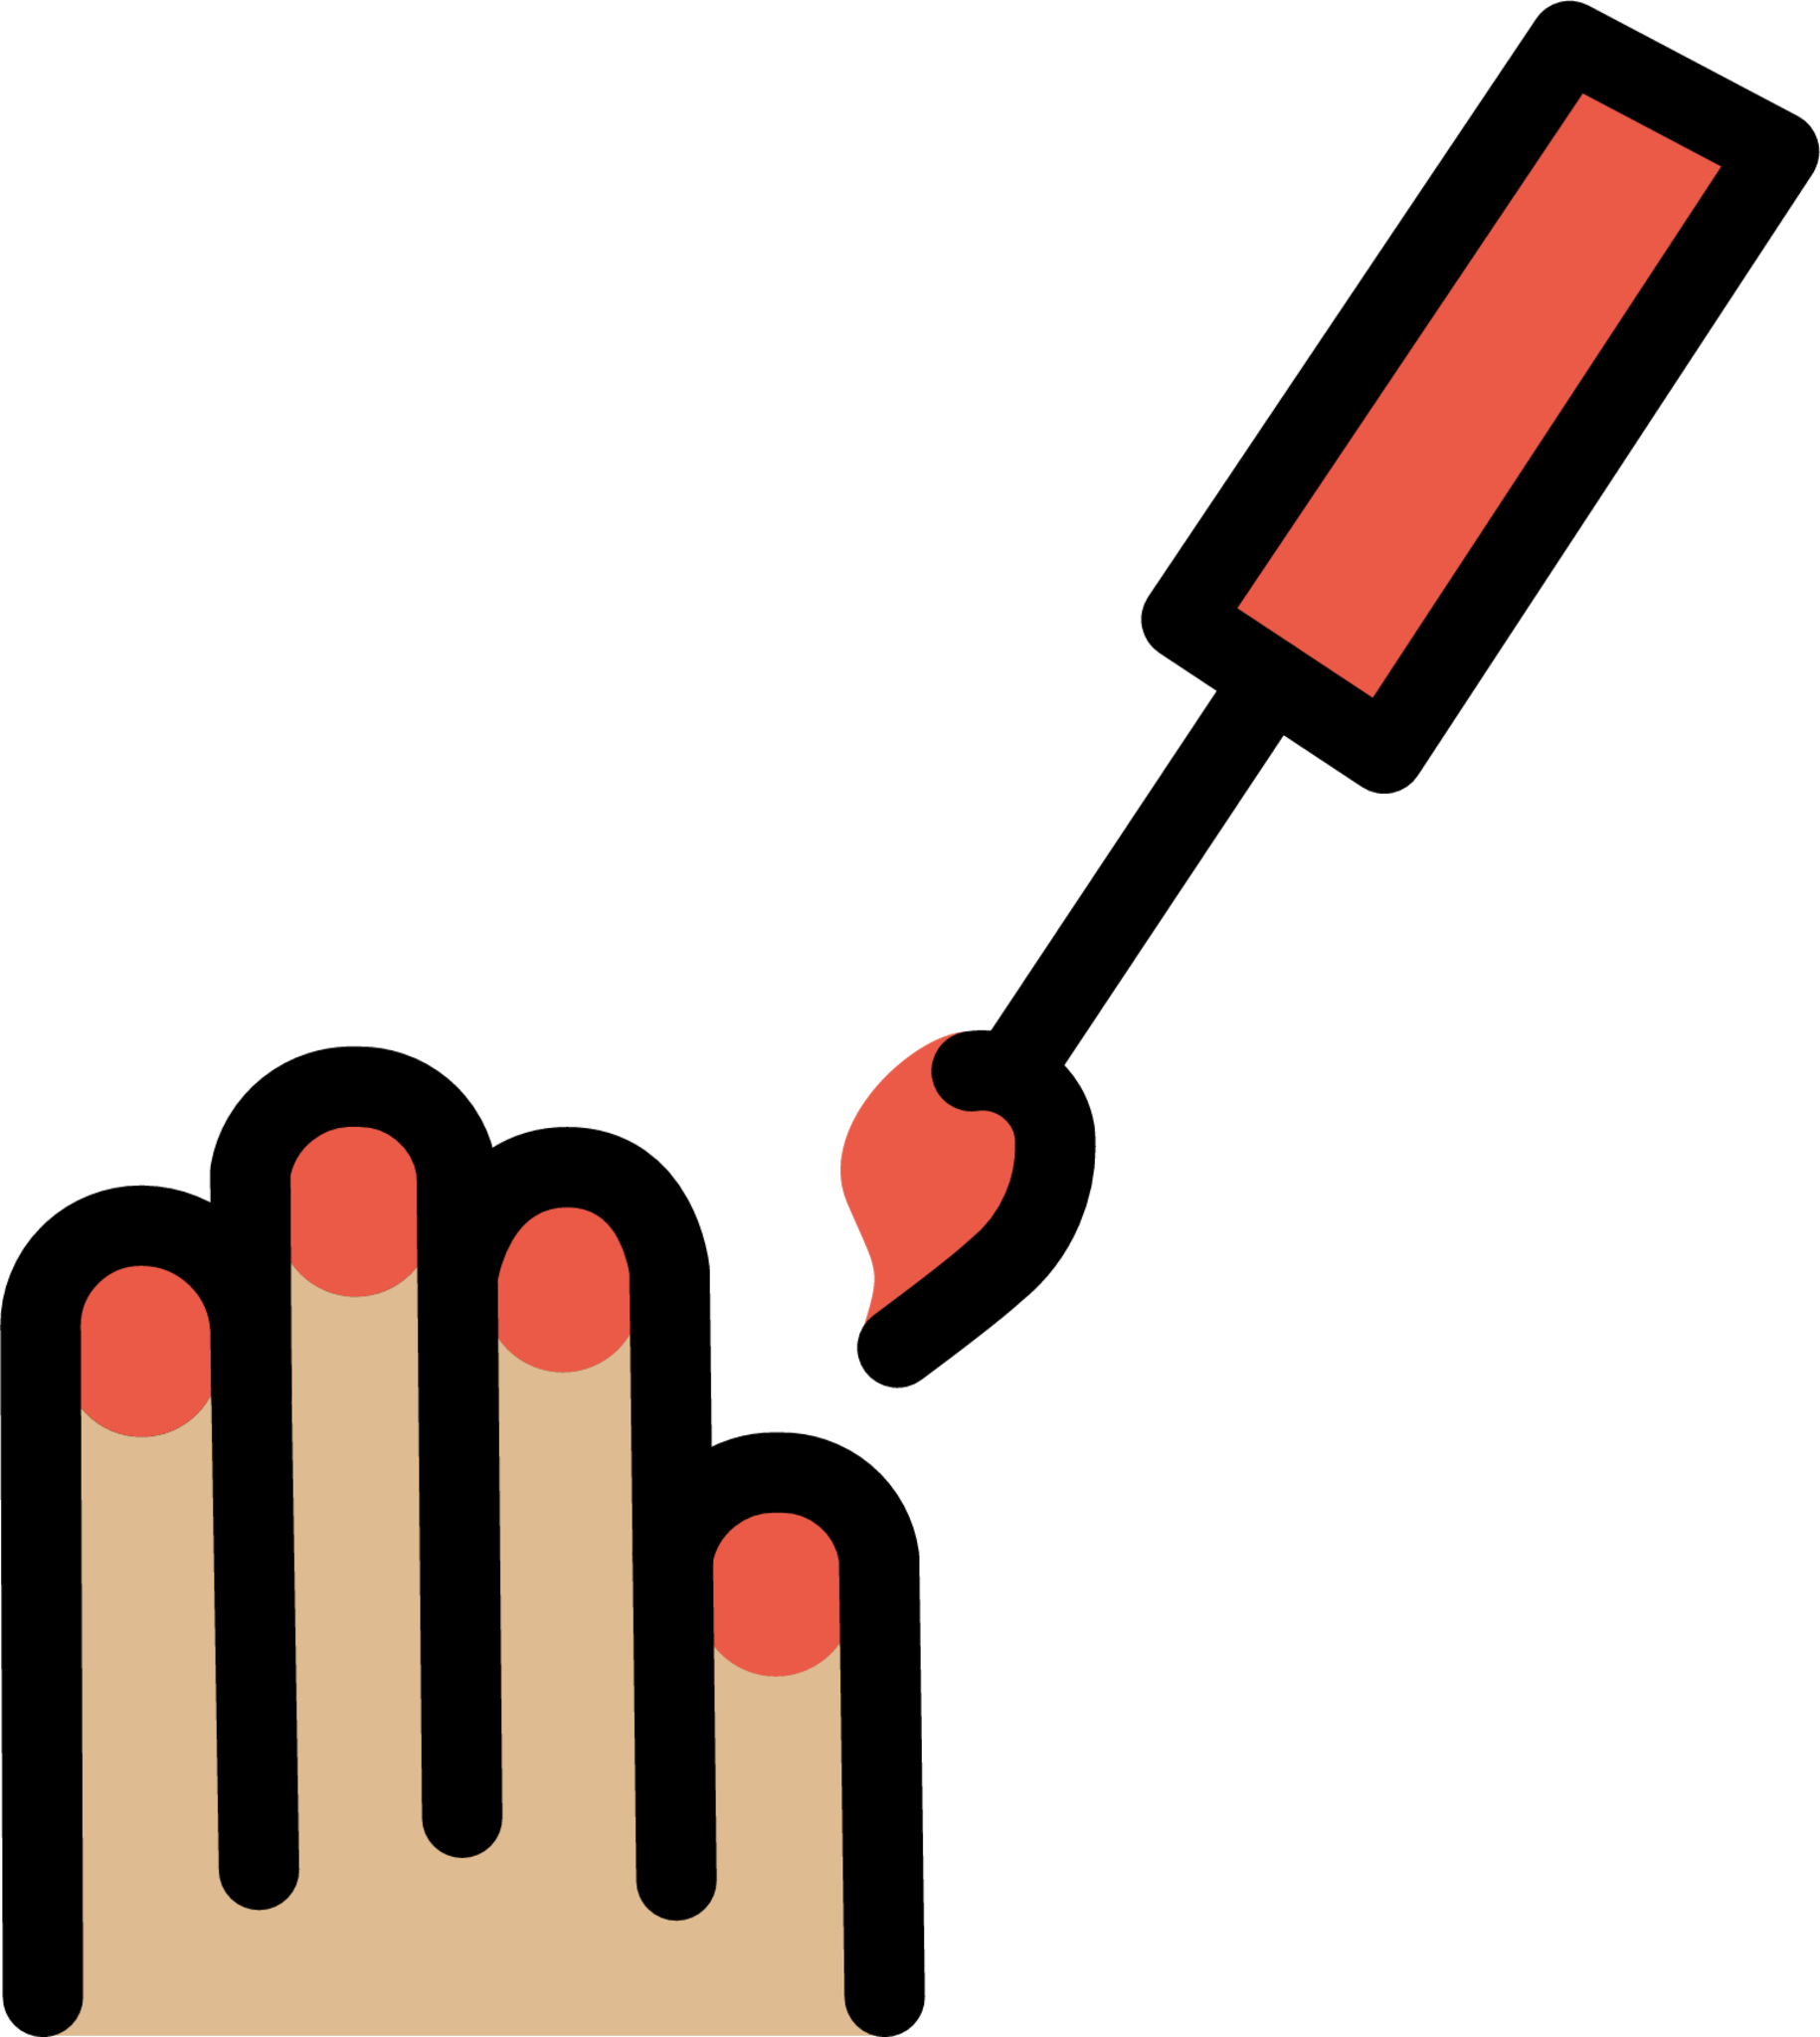 nail polish: medium-light skin tone emoji